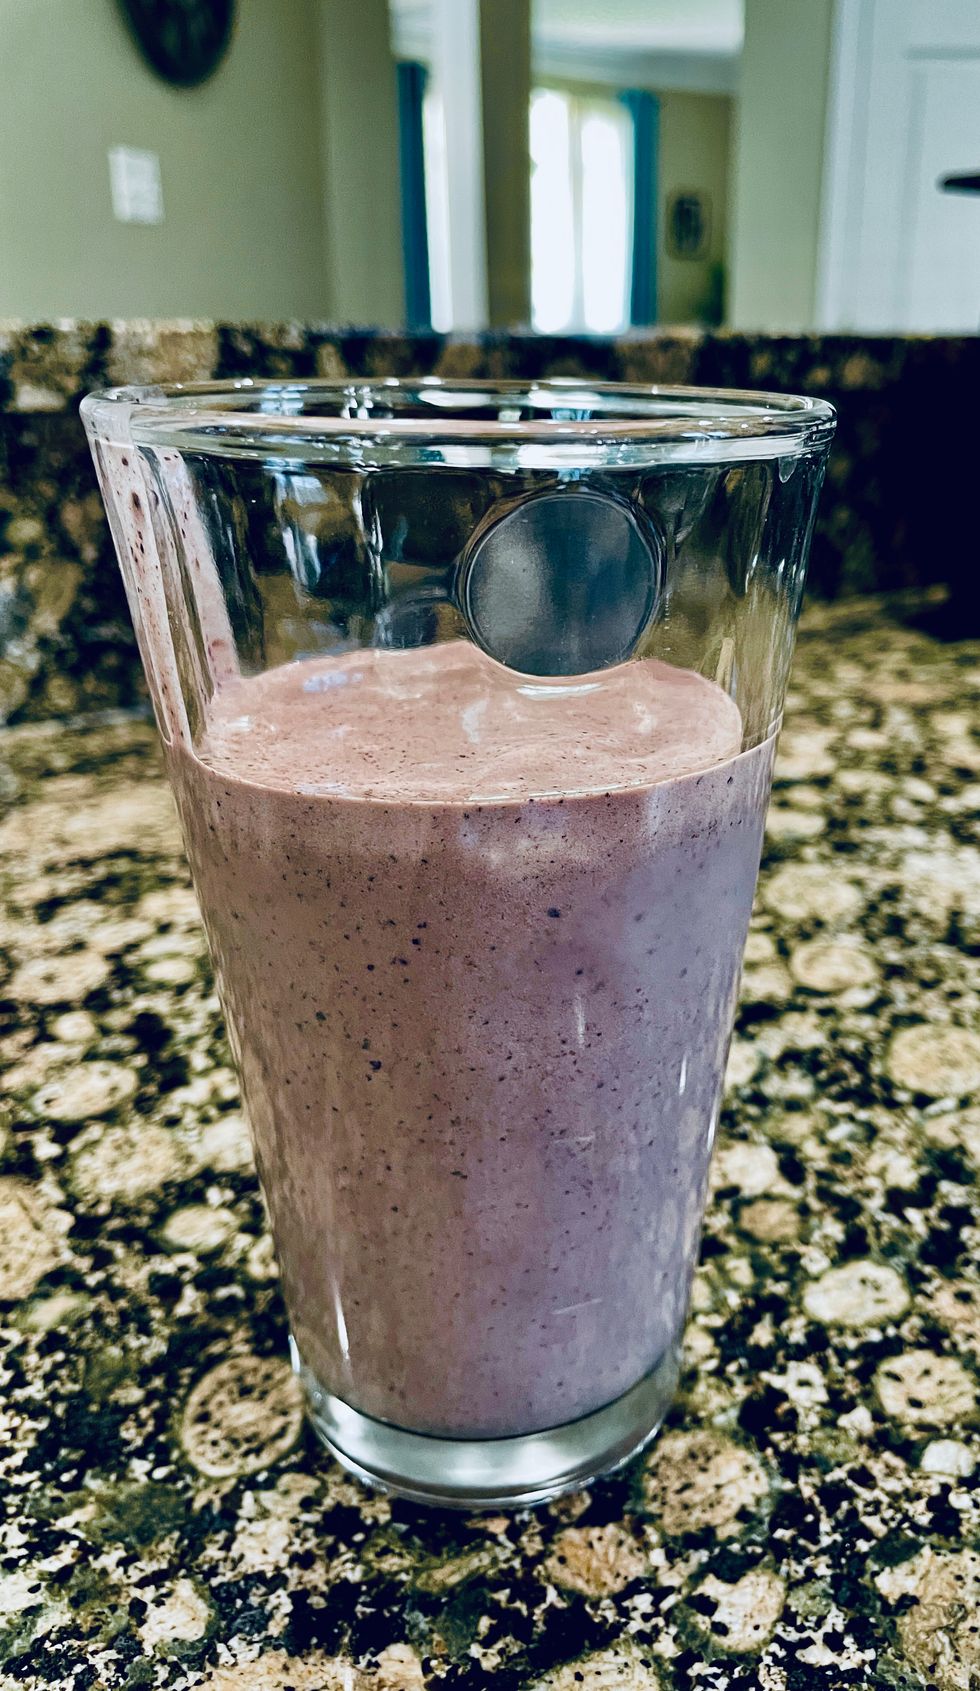 My Blueberry Chocolate Protein Smoothie Recipe